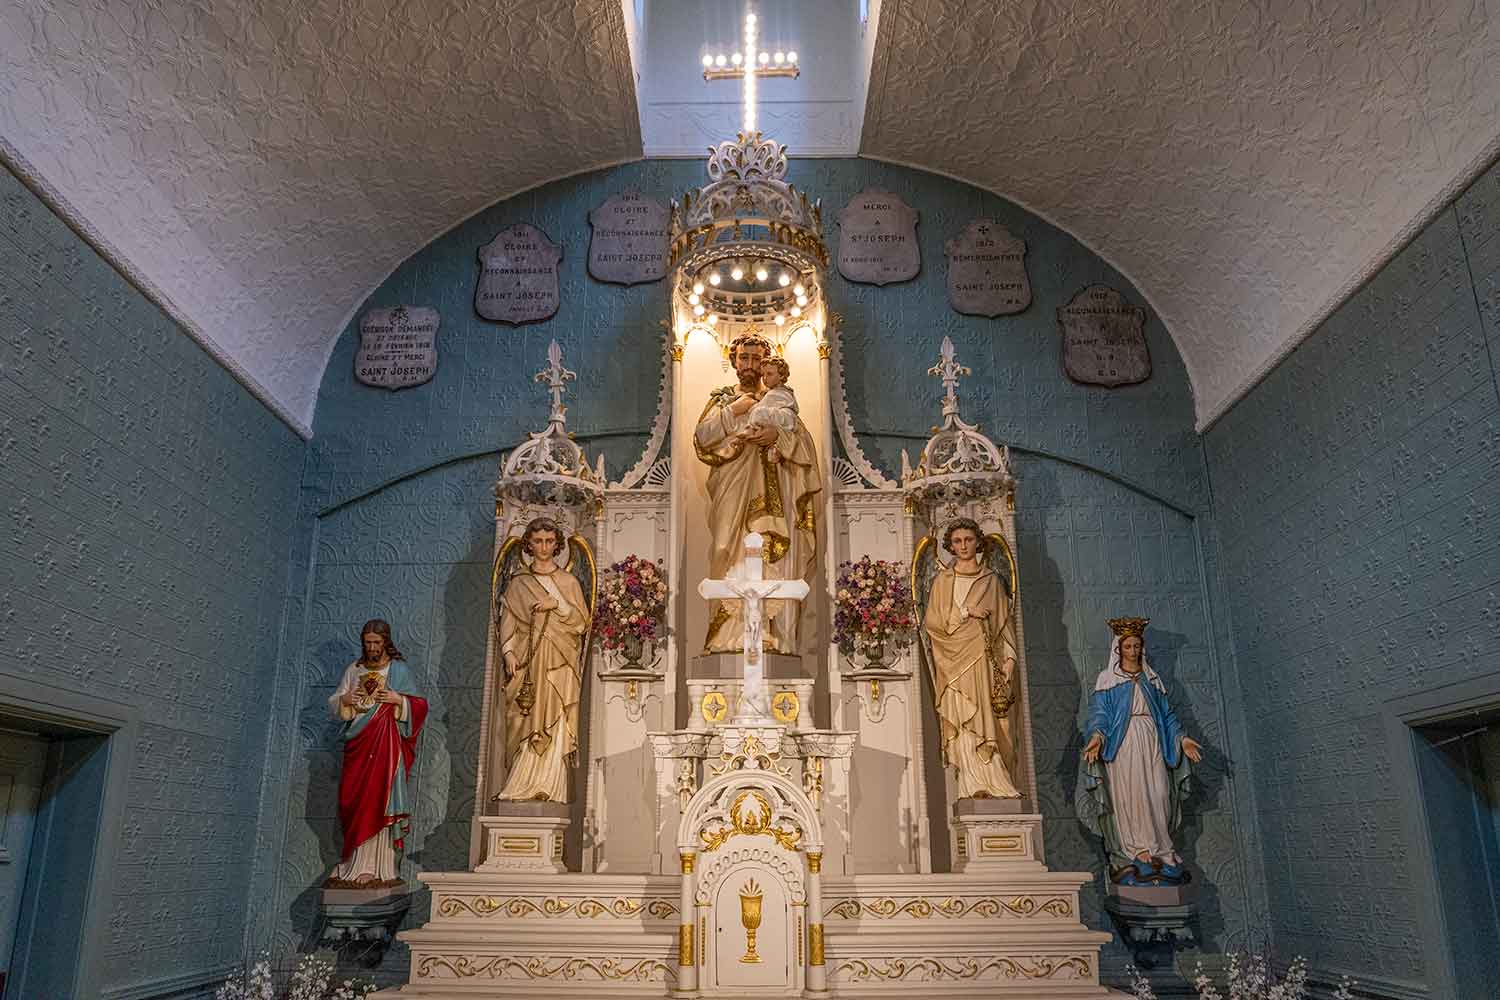 Shrine in Chapel, Saint Joseph's Oratory, Montreal, Canada